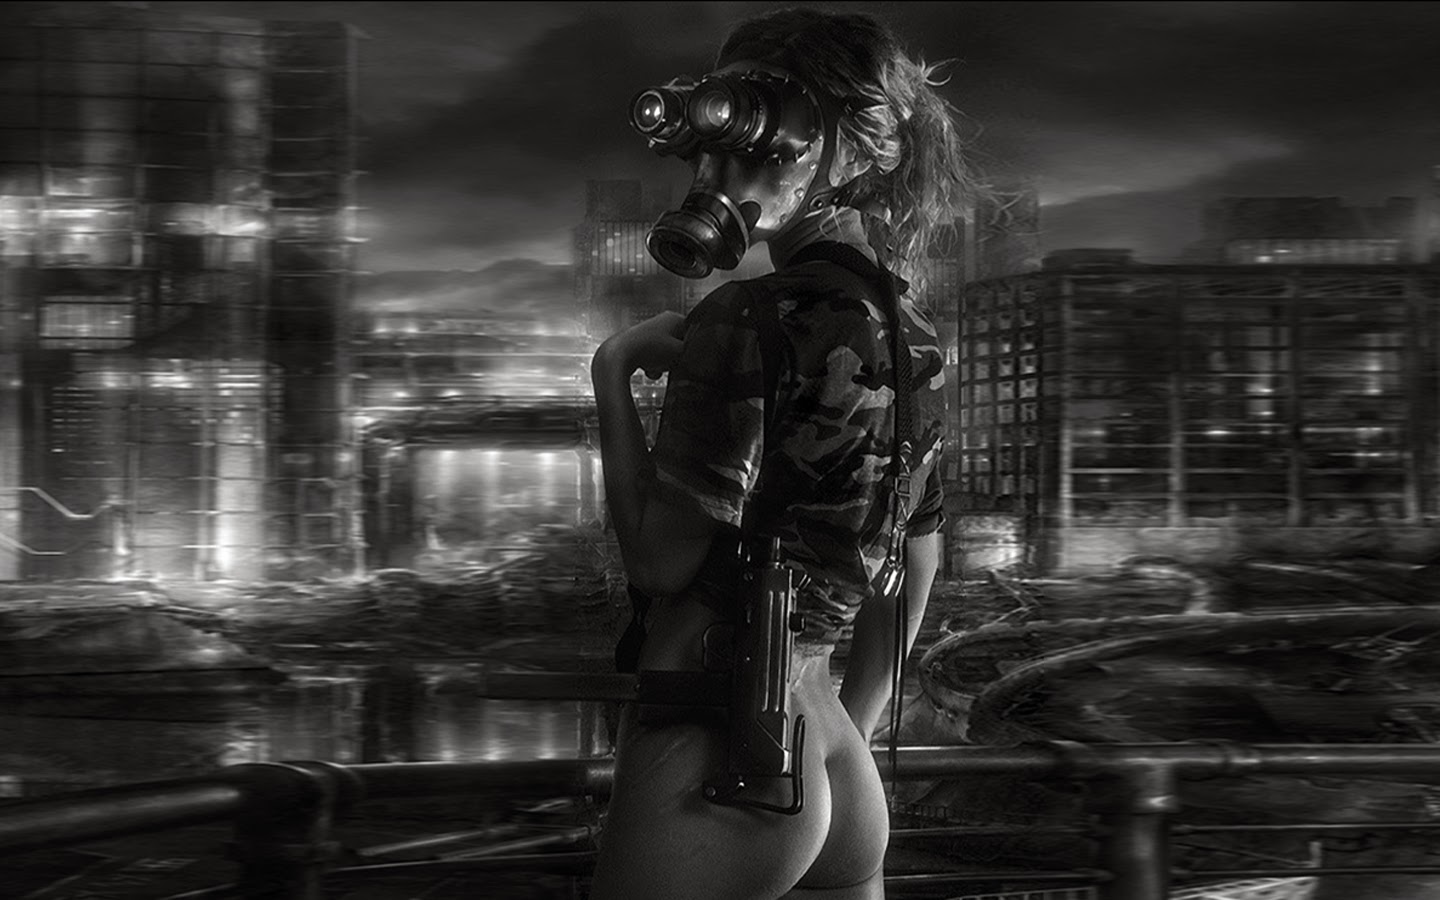 armed anime girl in post apocalyptic city by WaifuWorldArt on DeviantArt